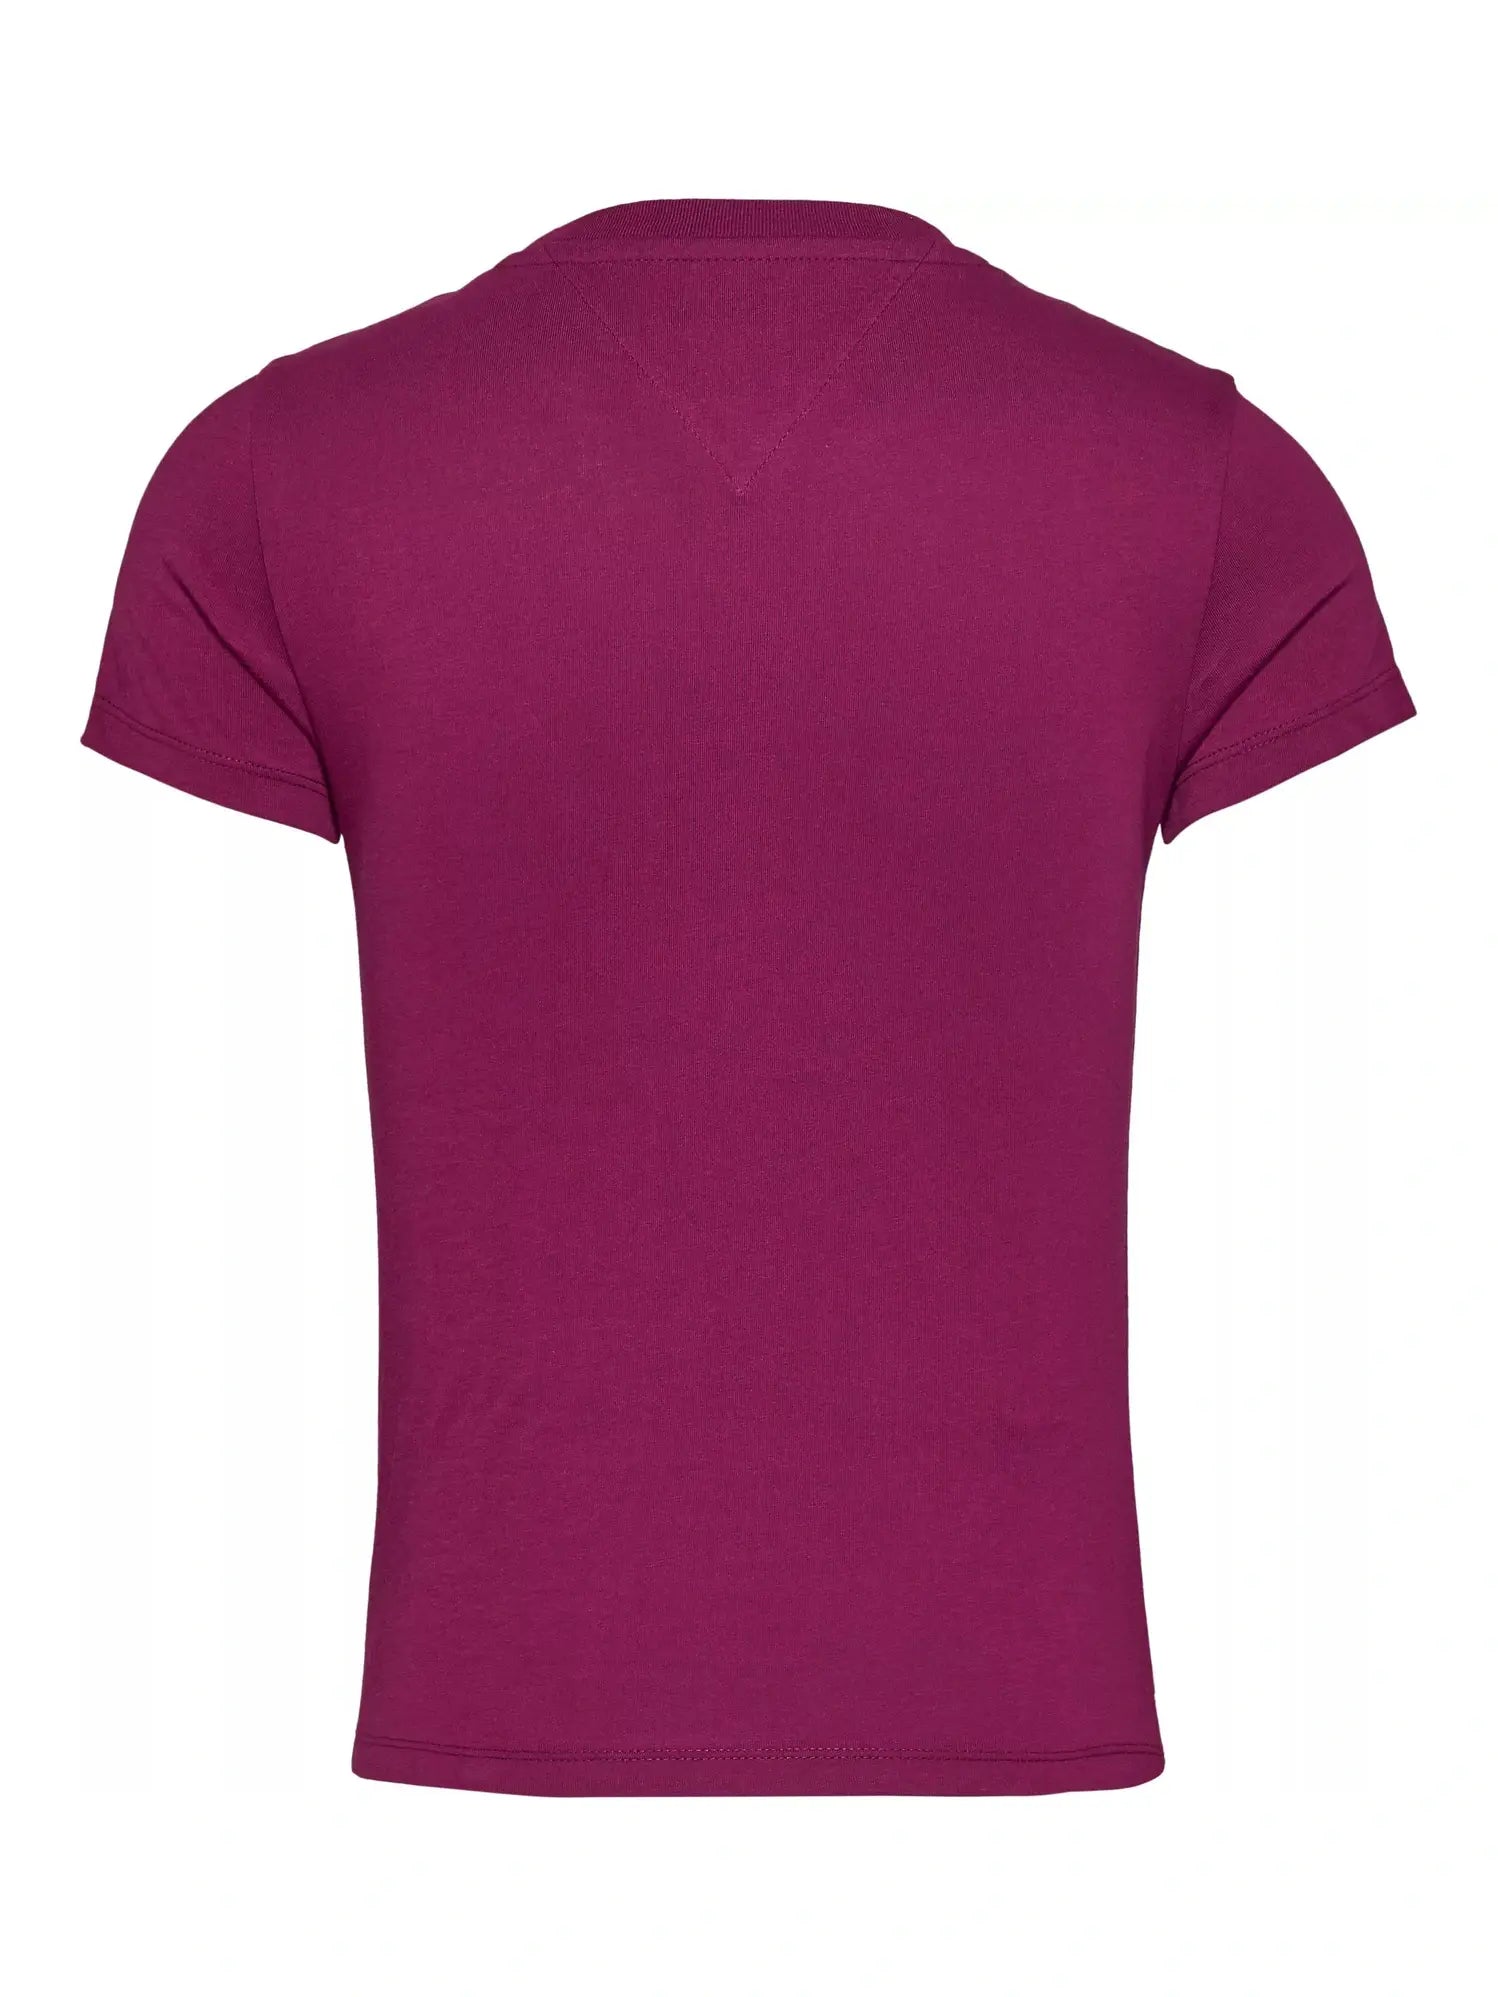 TJW Slim linear t-shirt - valley grape